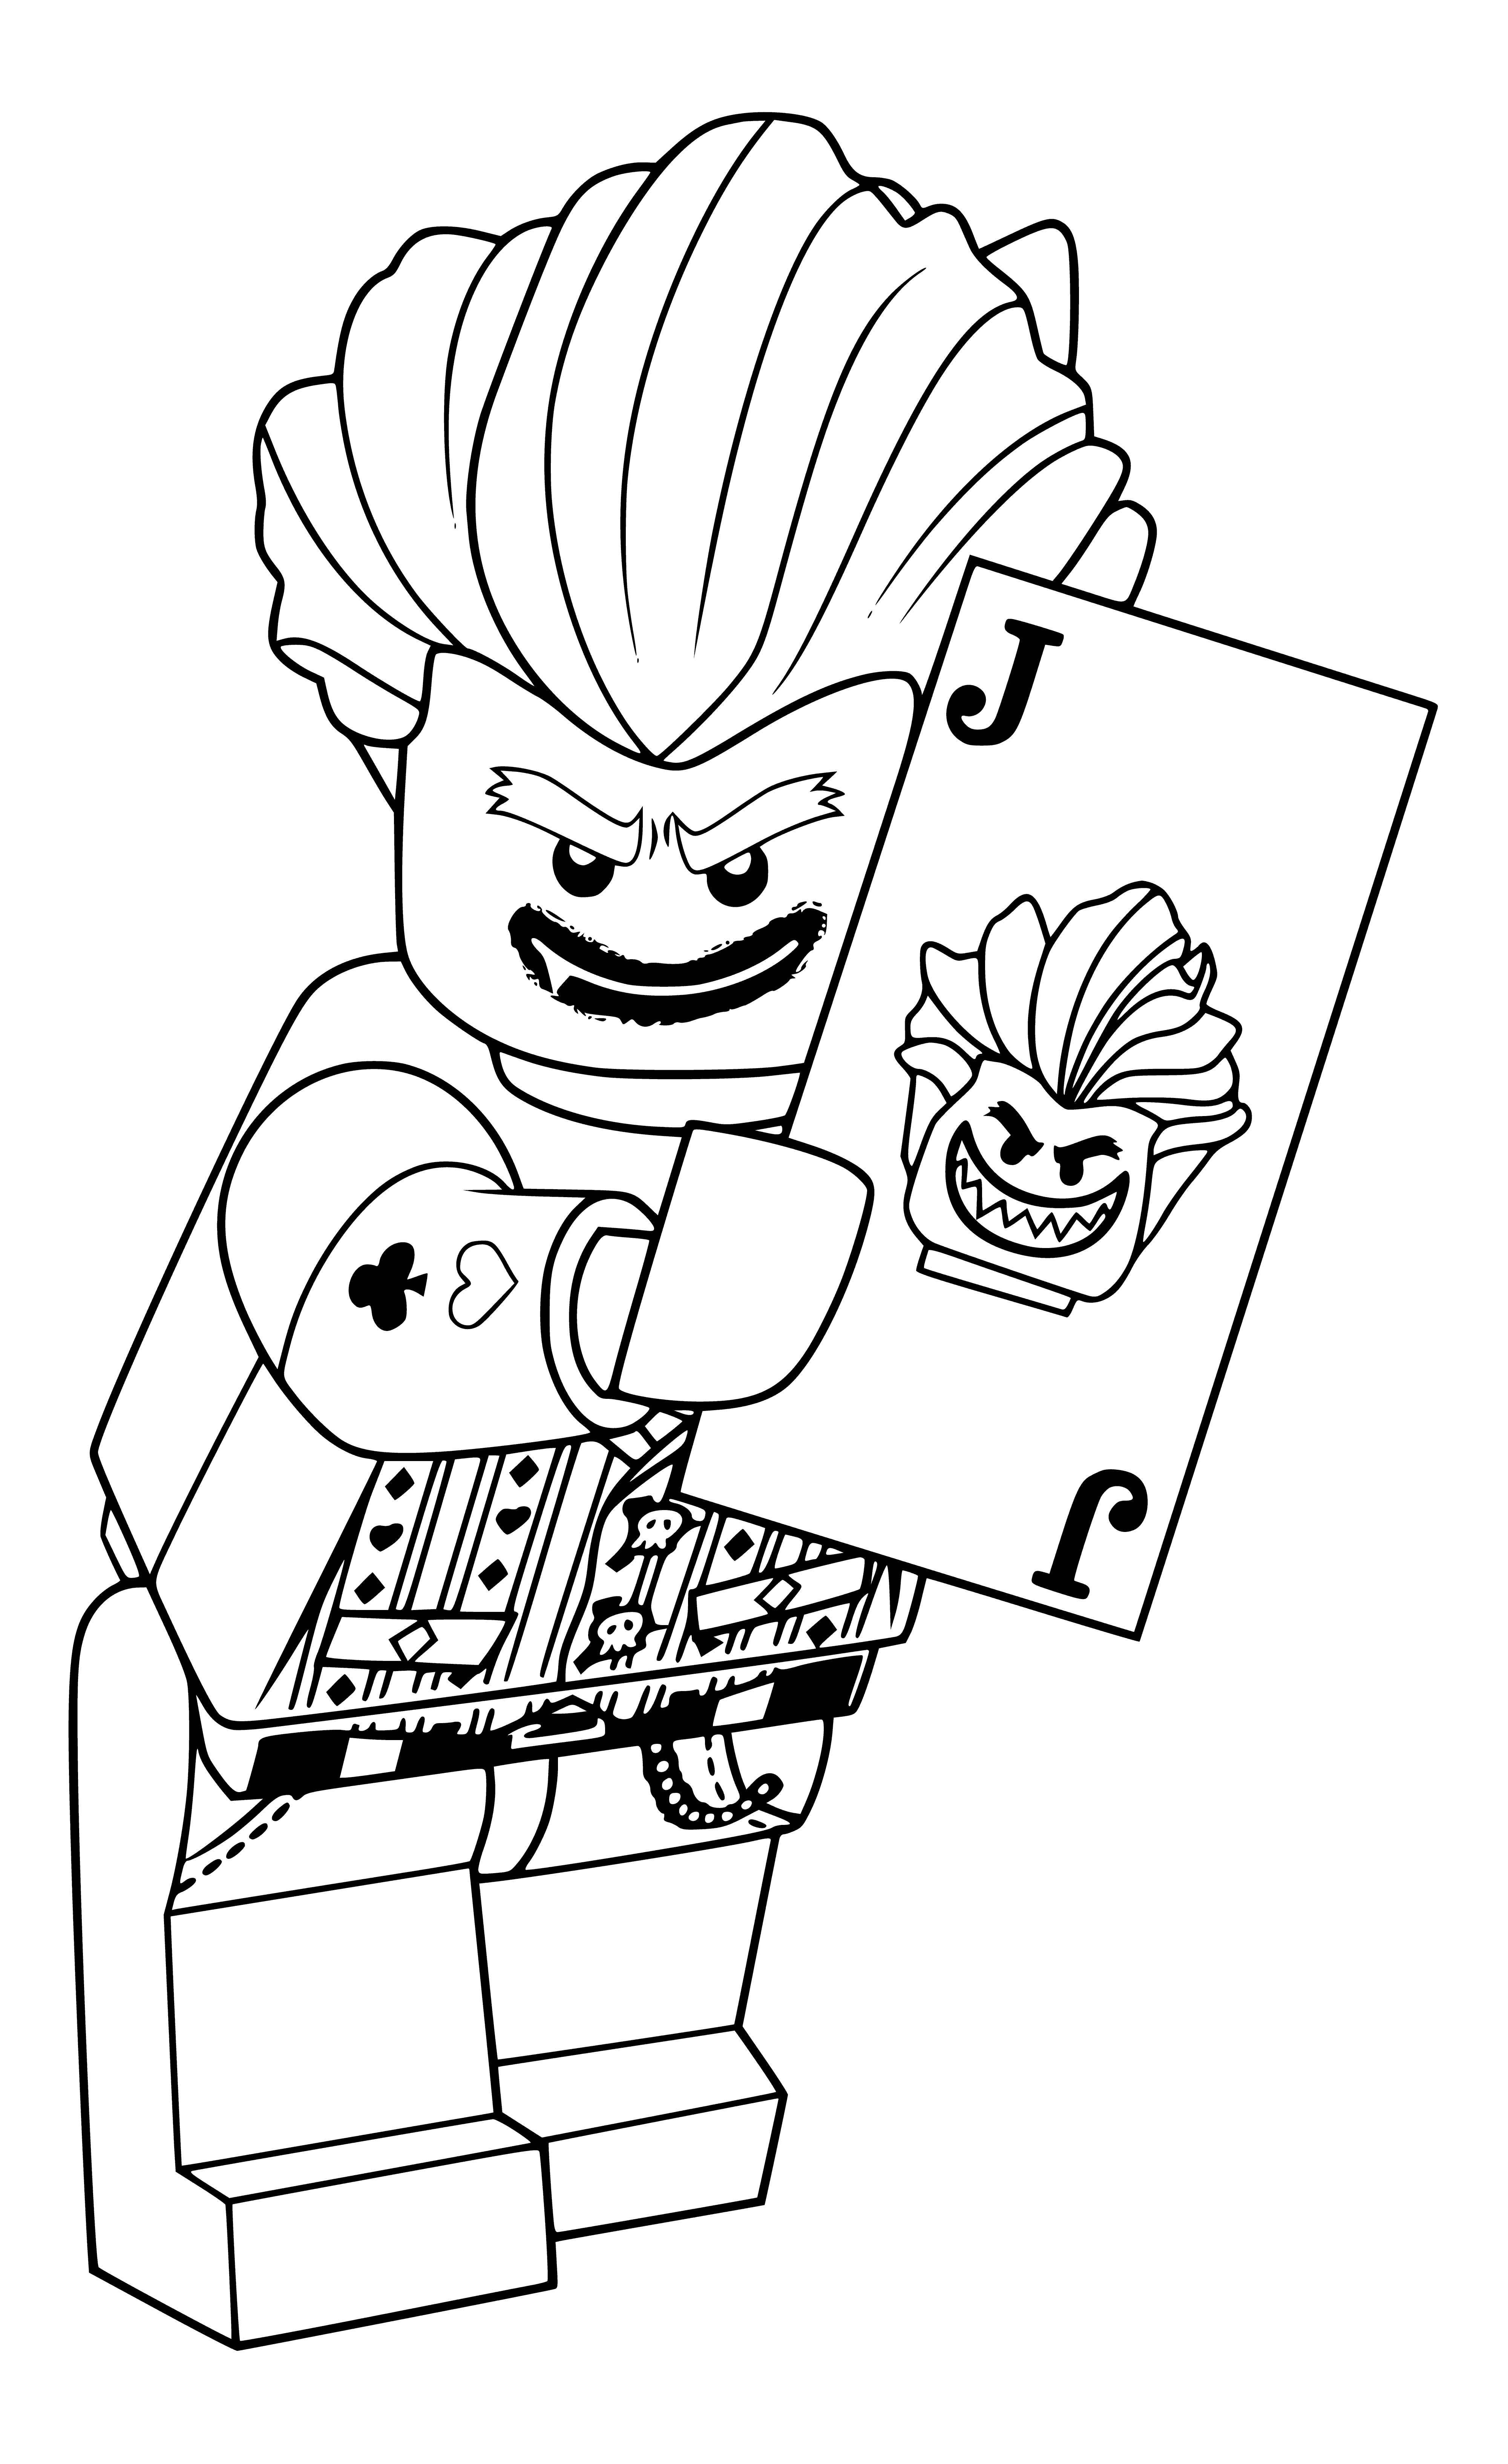 Joker coloring page